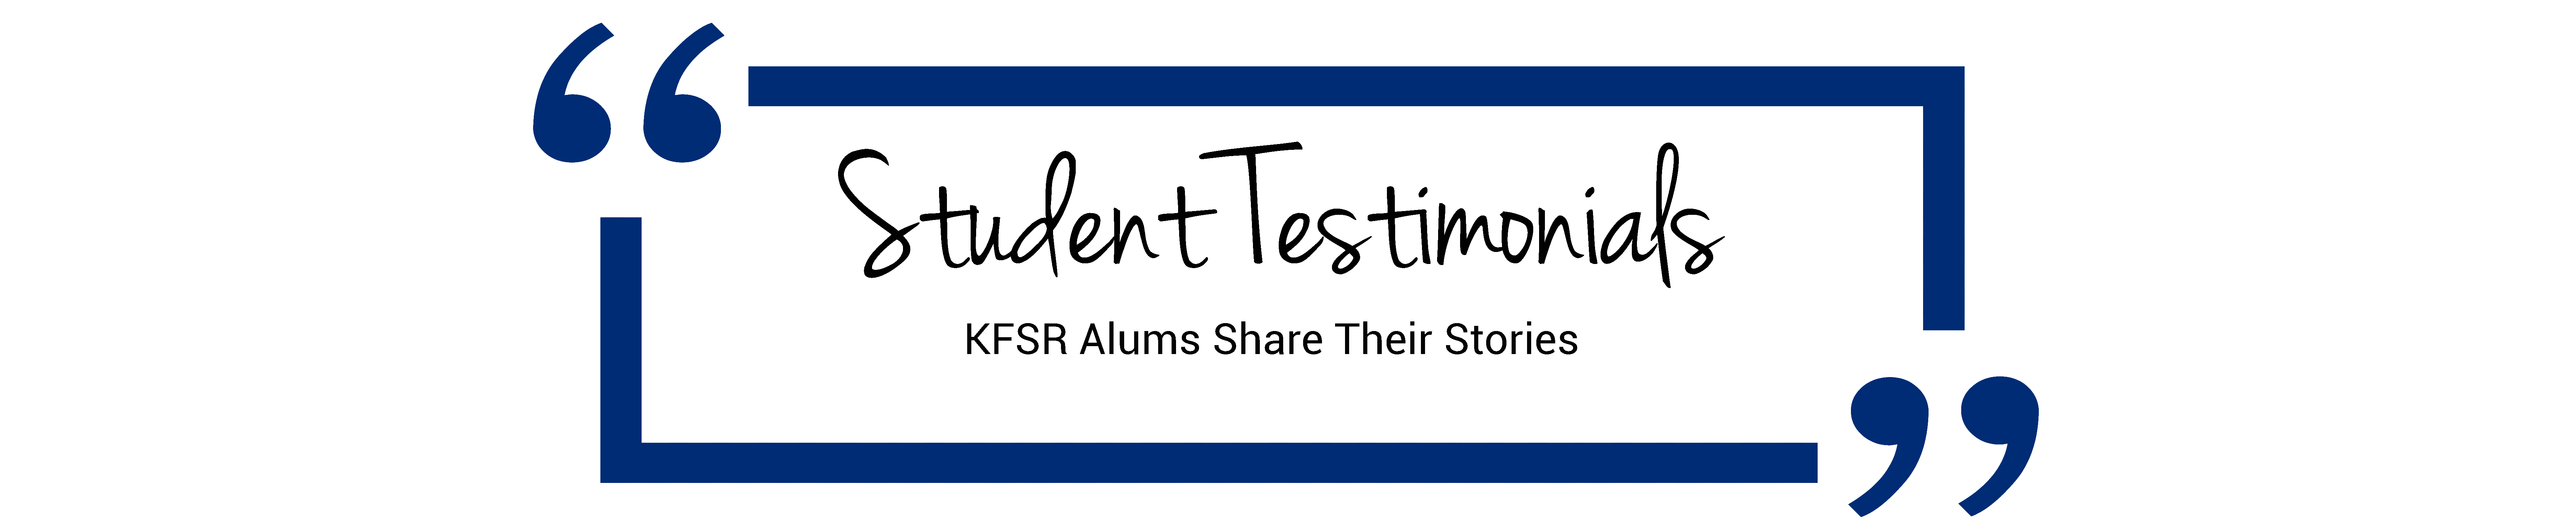 kfsr student testimonials graphic